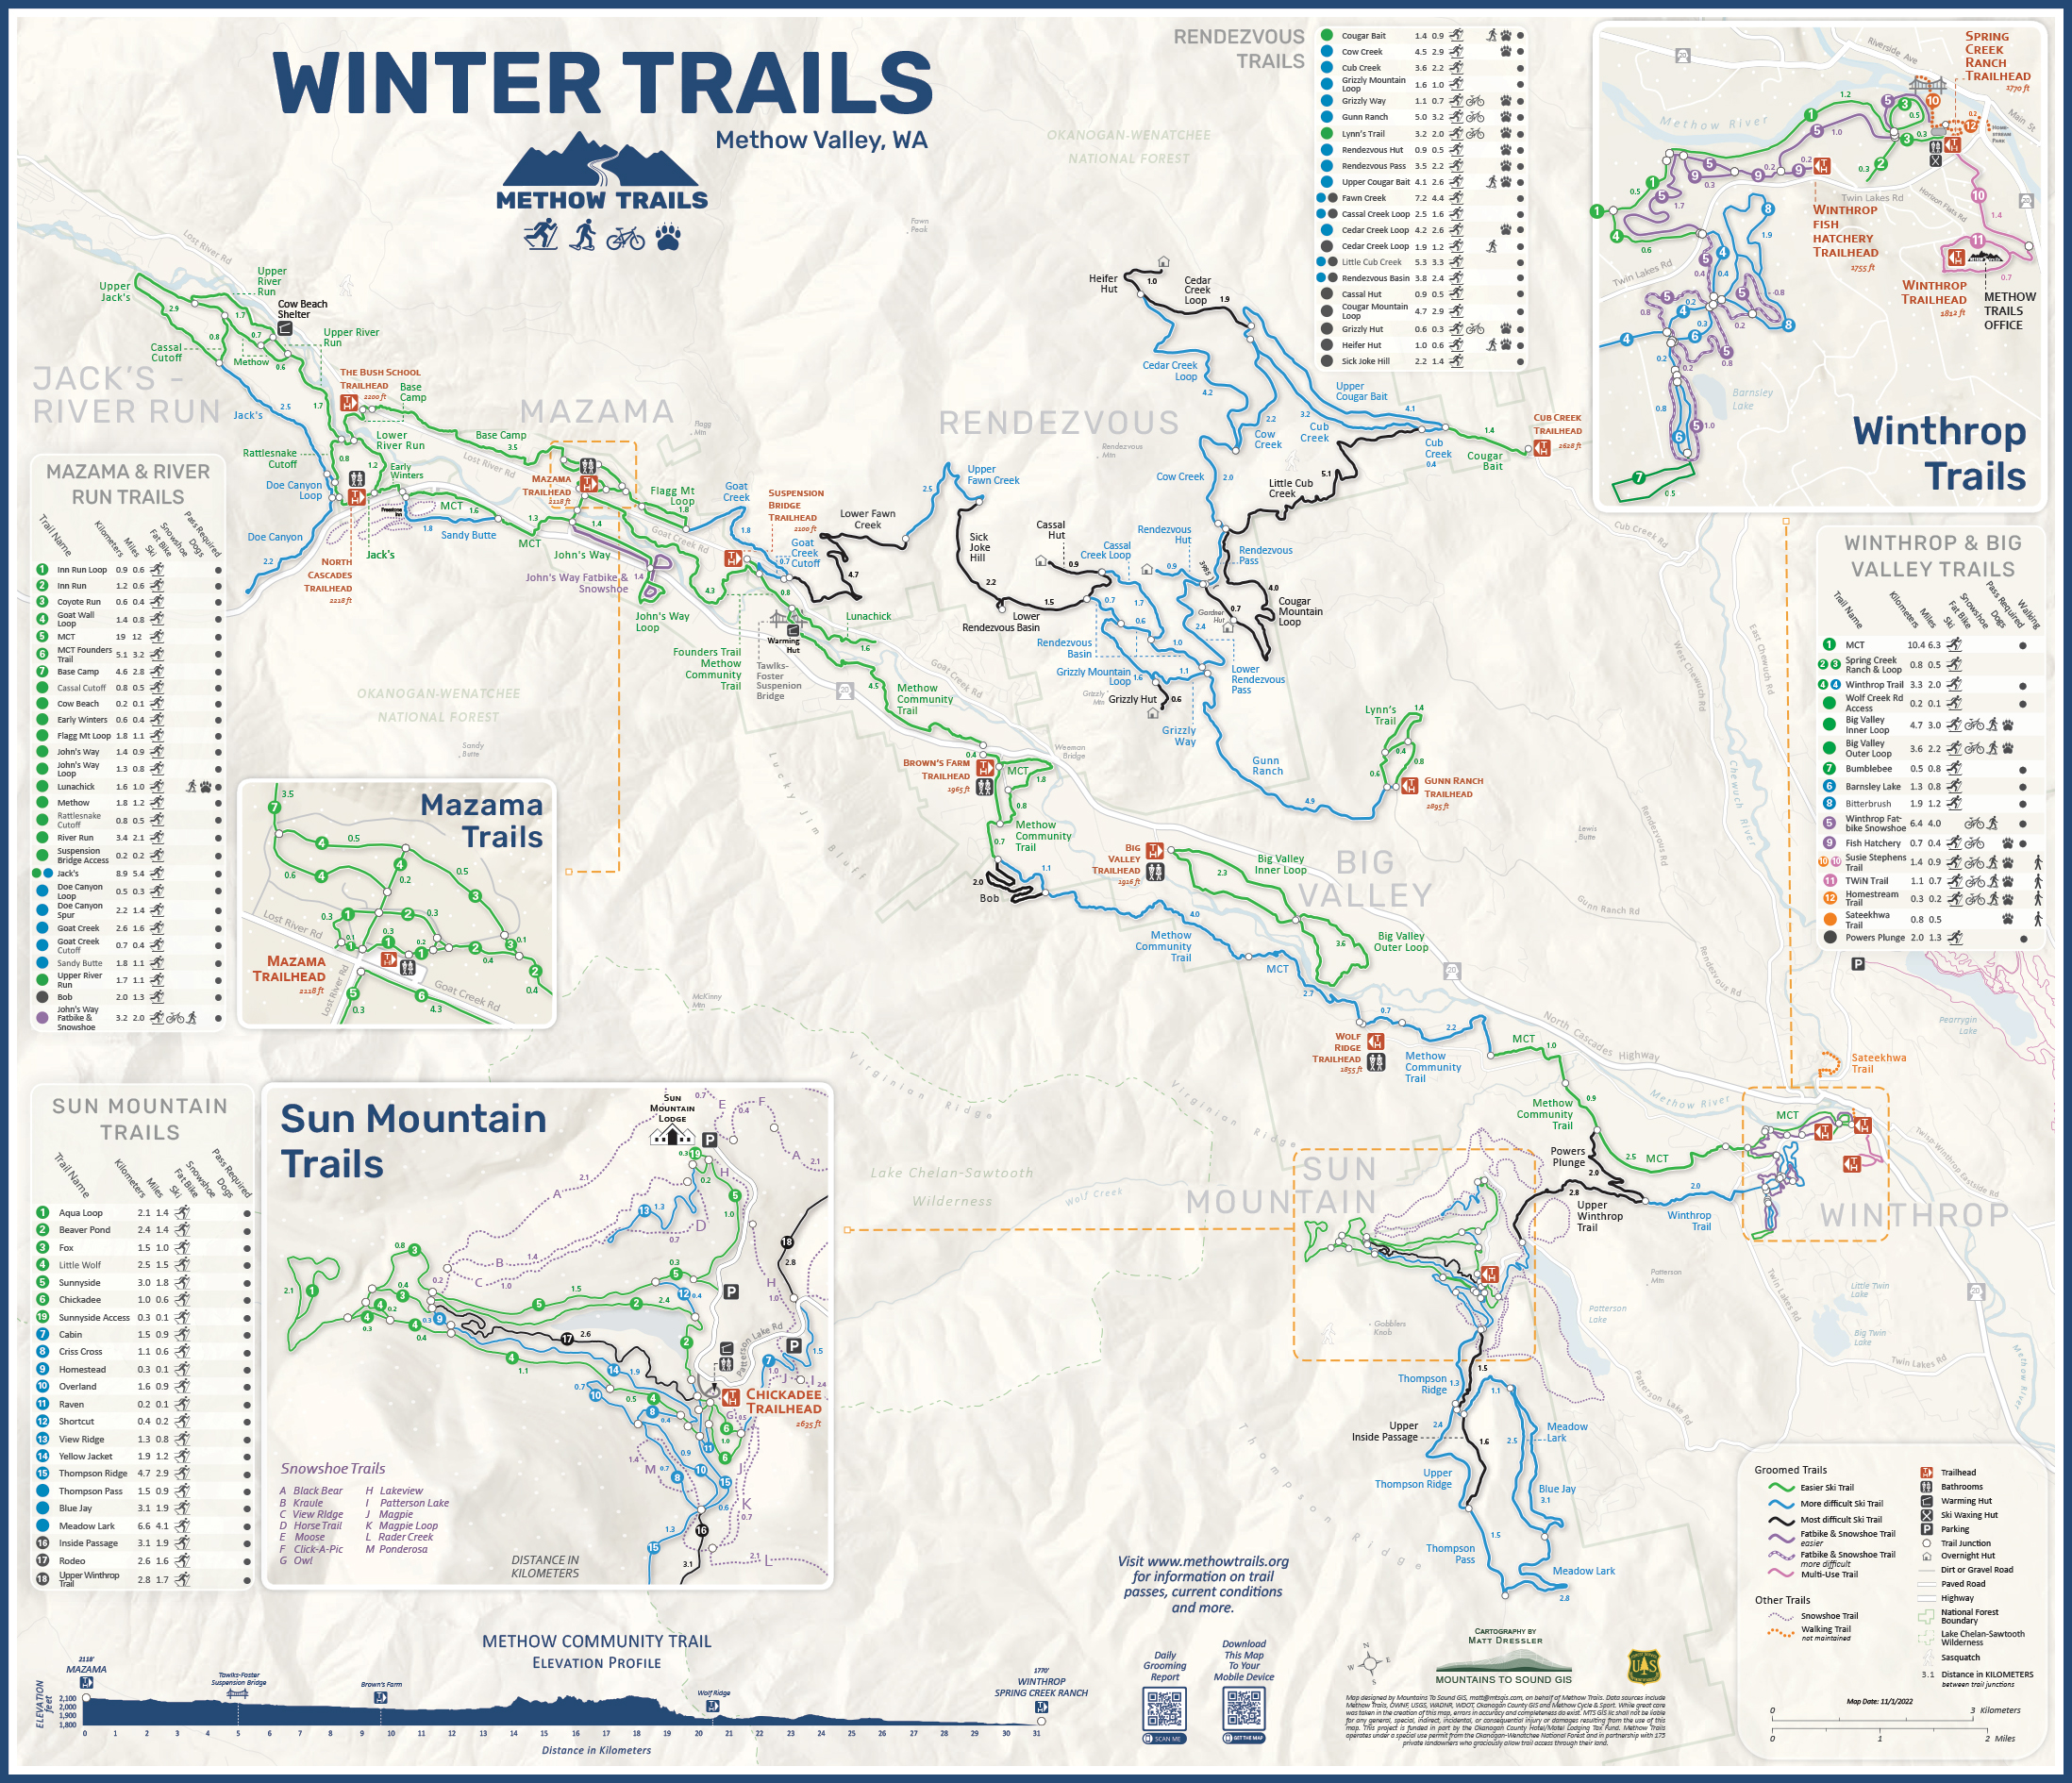 Sample trails map